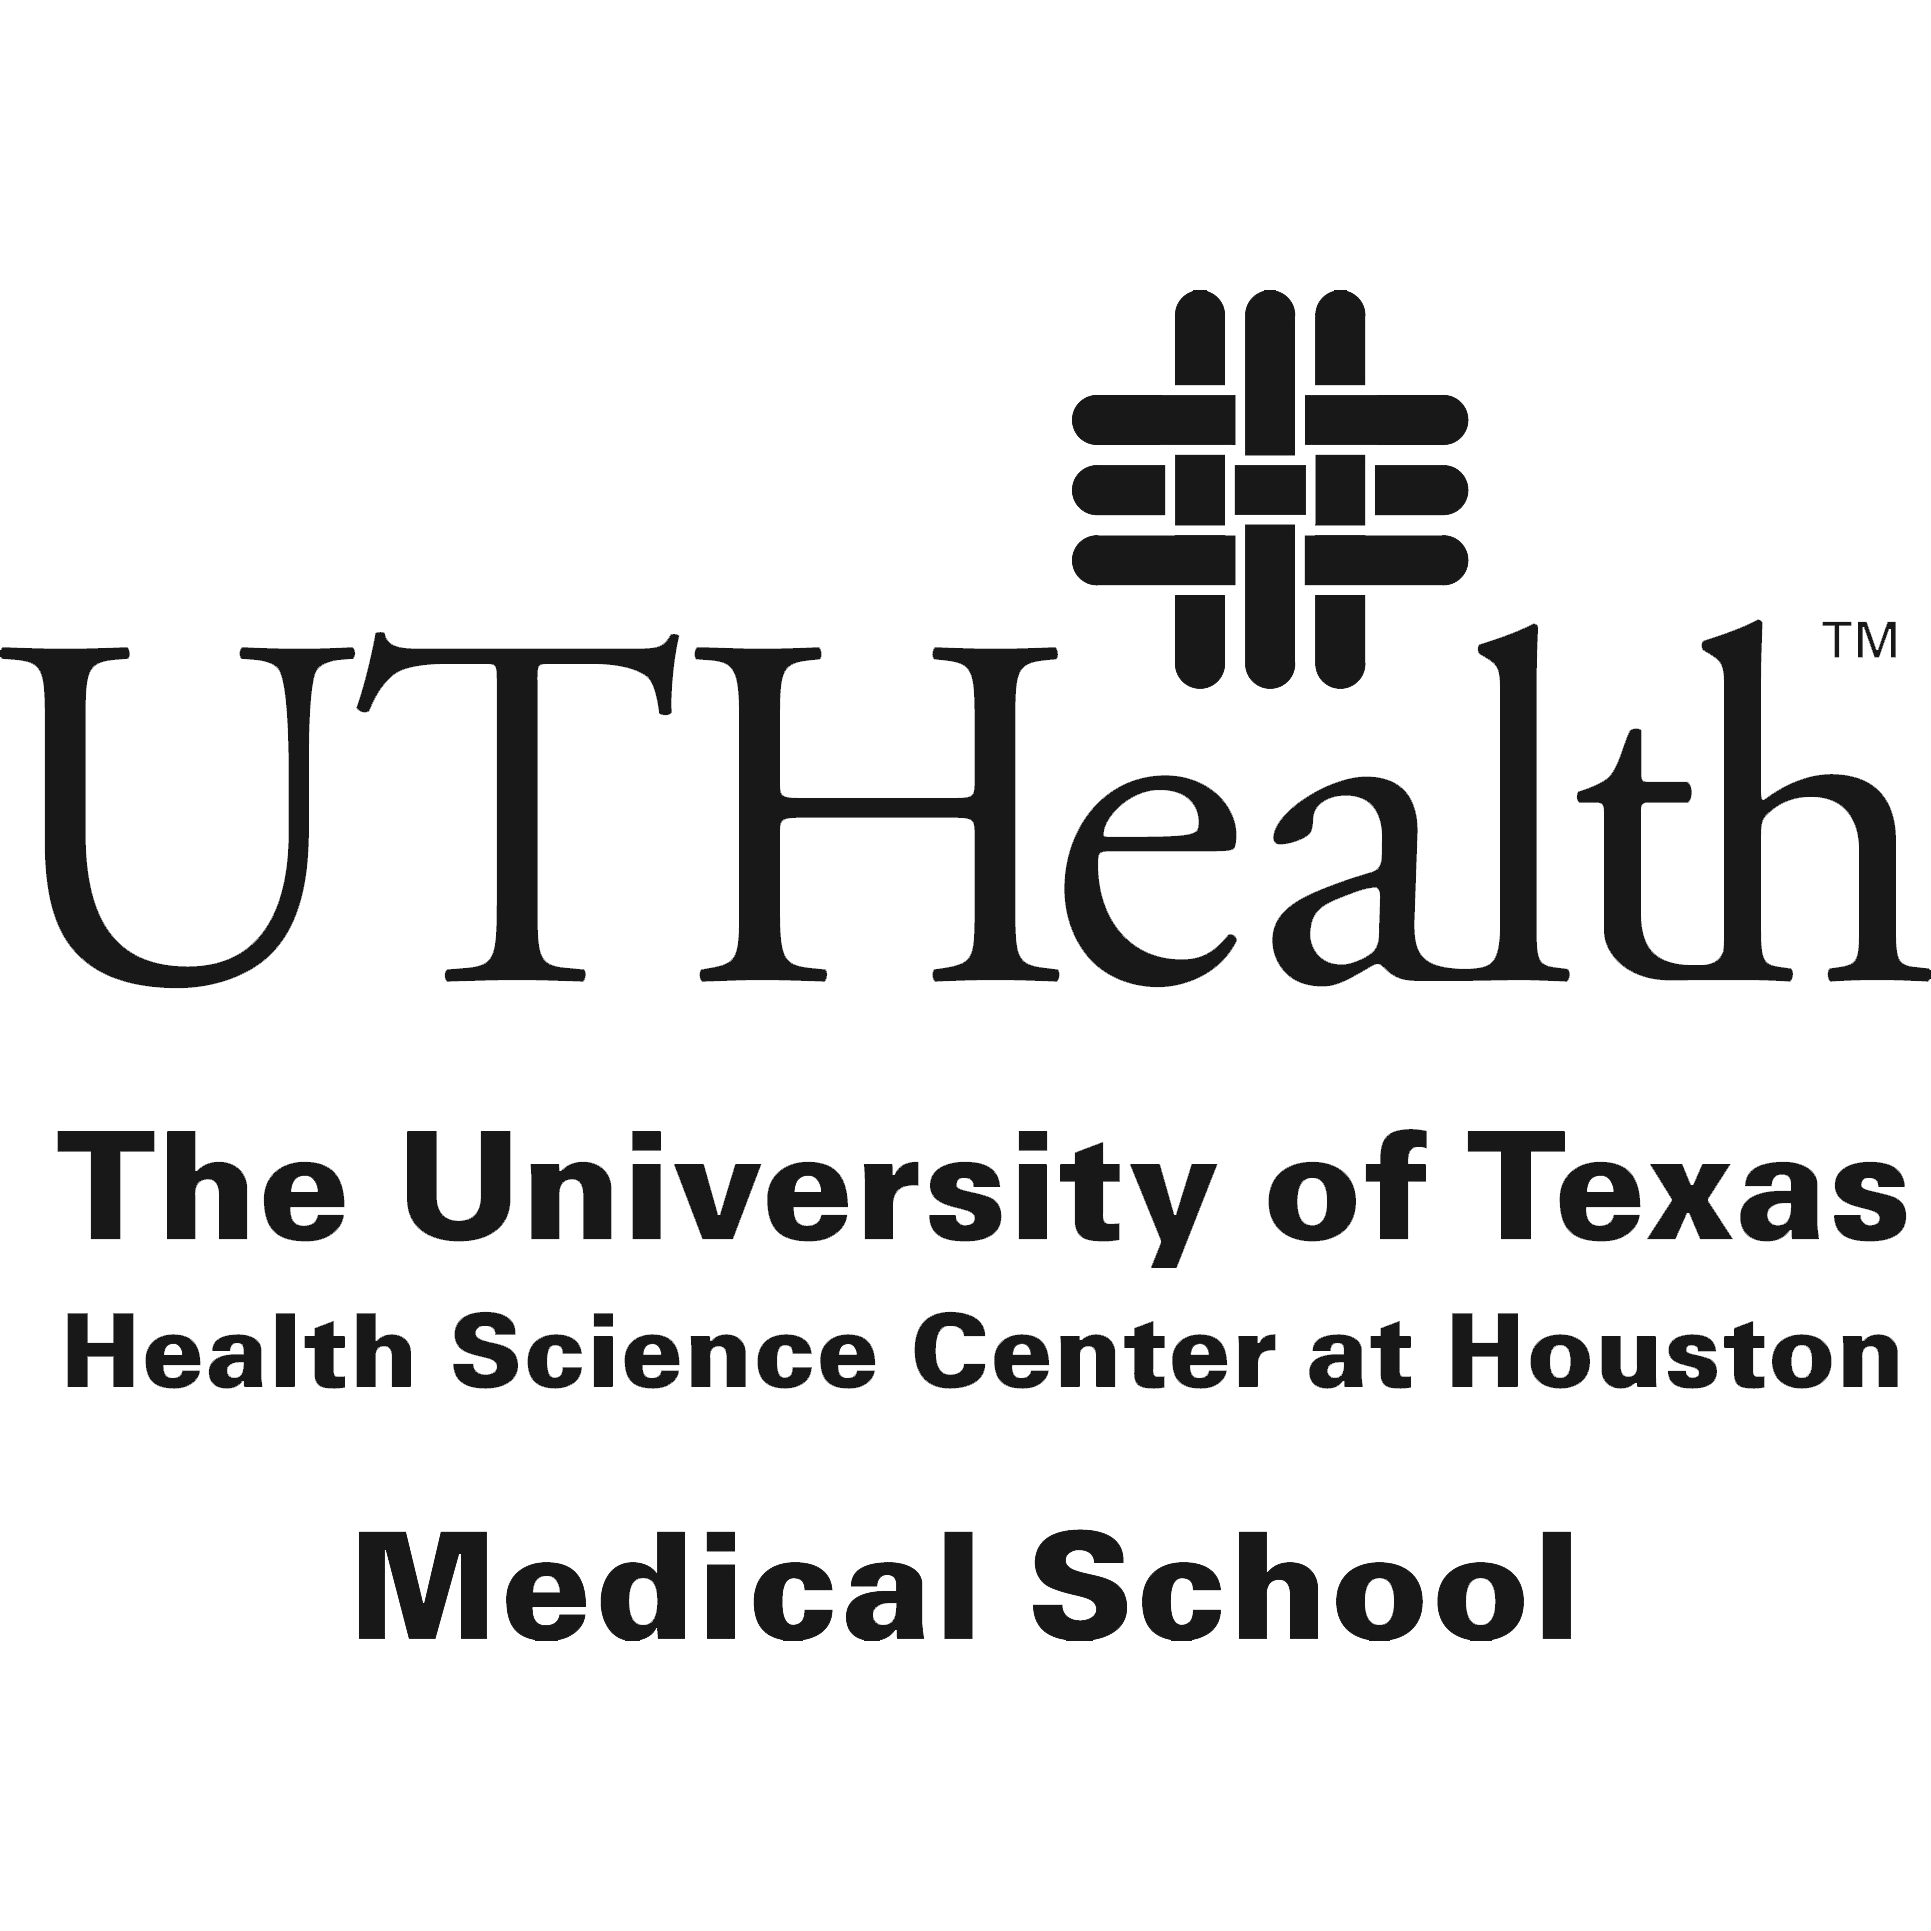 University of Texas Health Sciences Center Logo